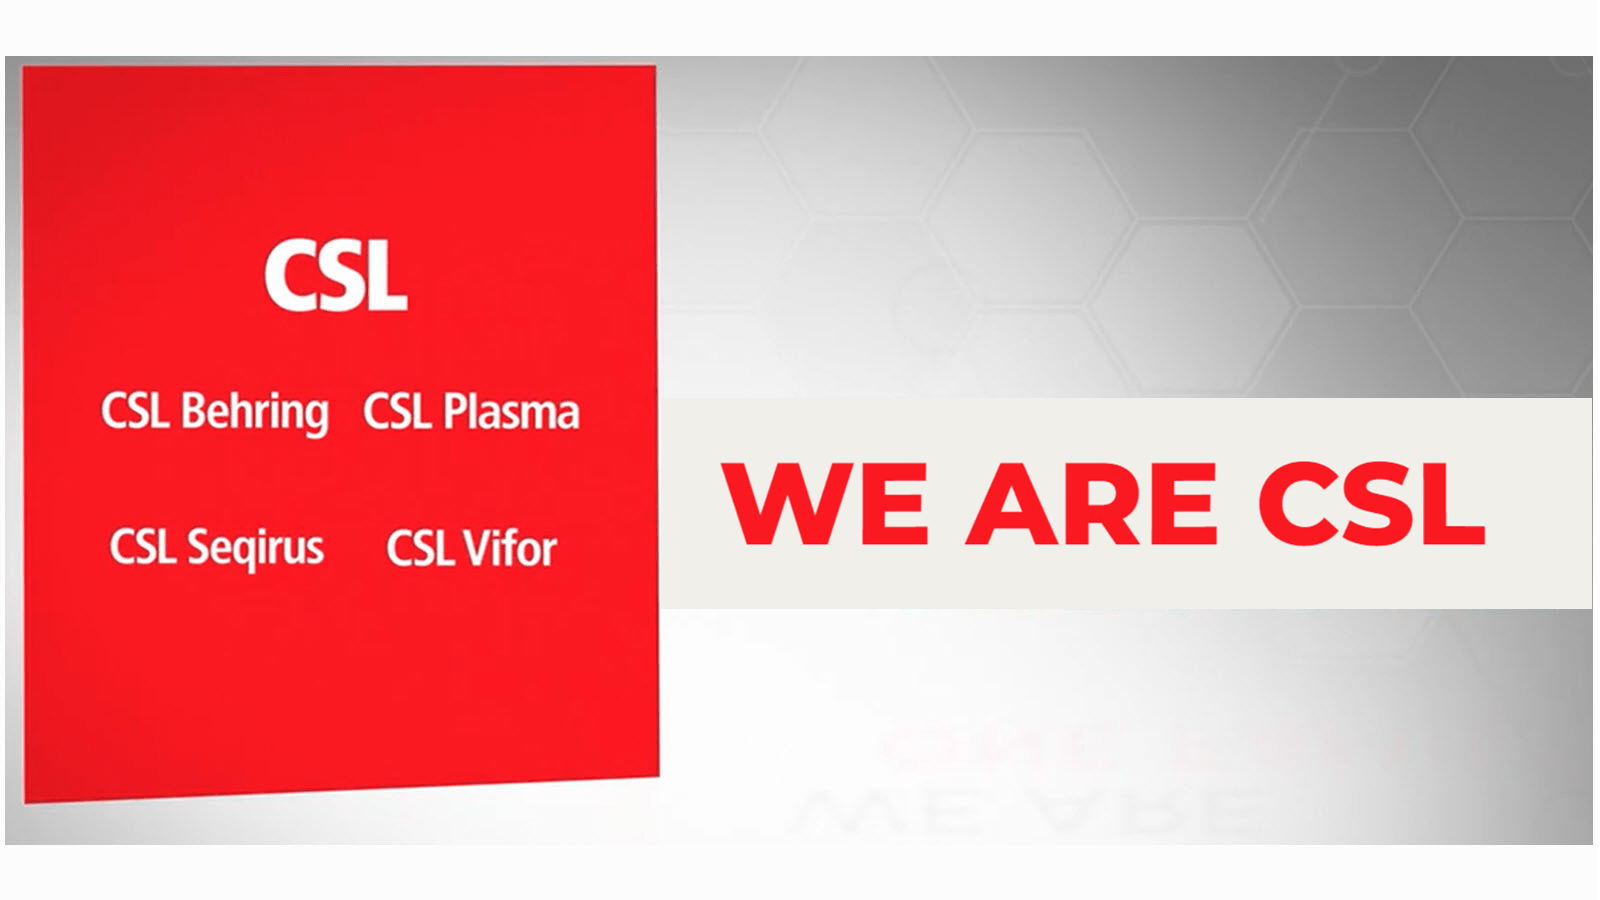 We Are CSL featuring business units CSL Behring, CSL Plasma, CSL Seqirus and CSL Vifor